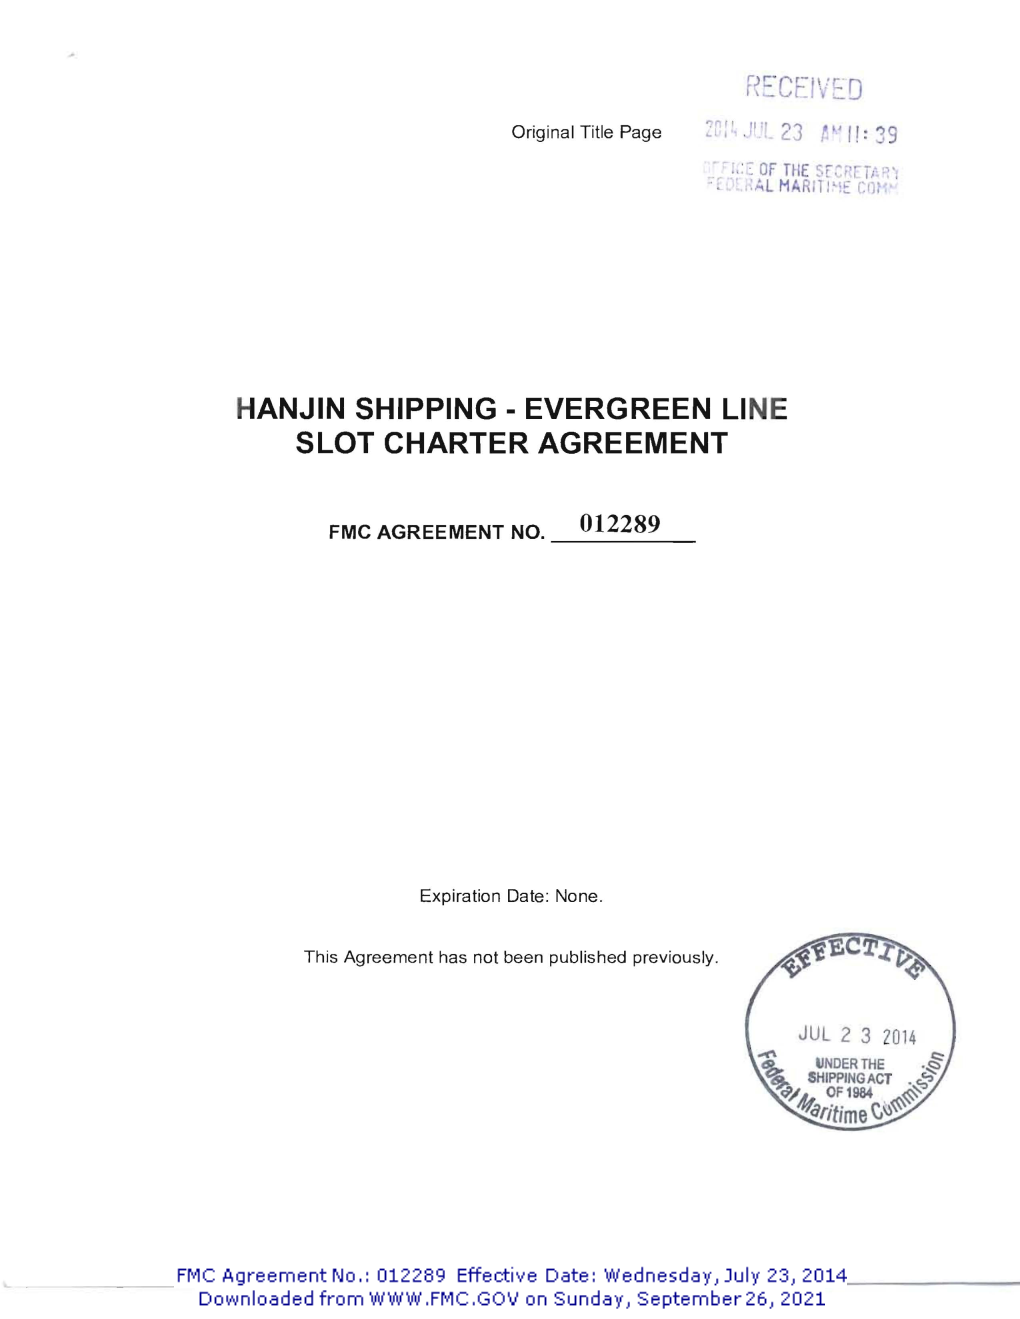 Hanjin Shipping - Evergreen Line Slot Charter Agreement